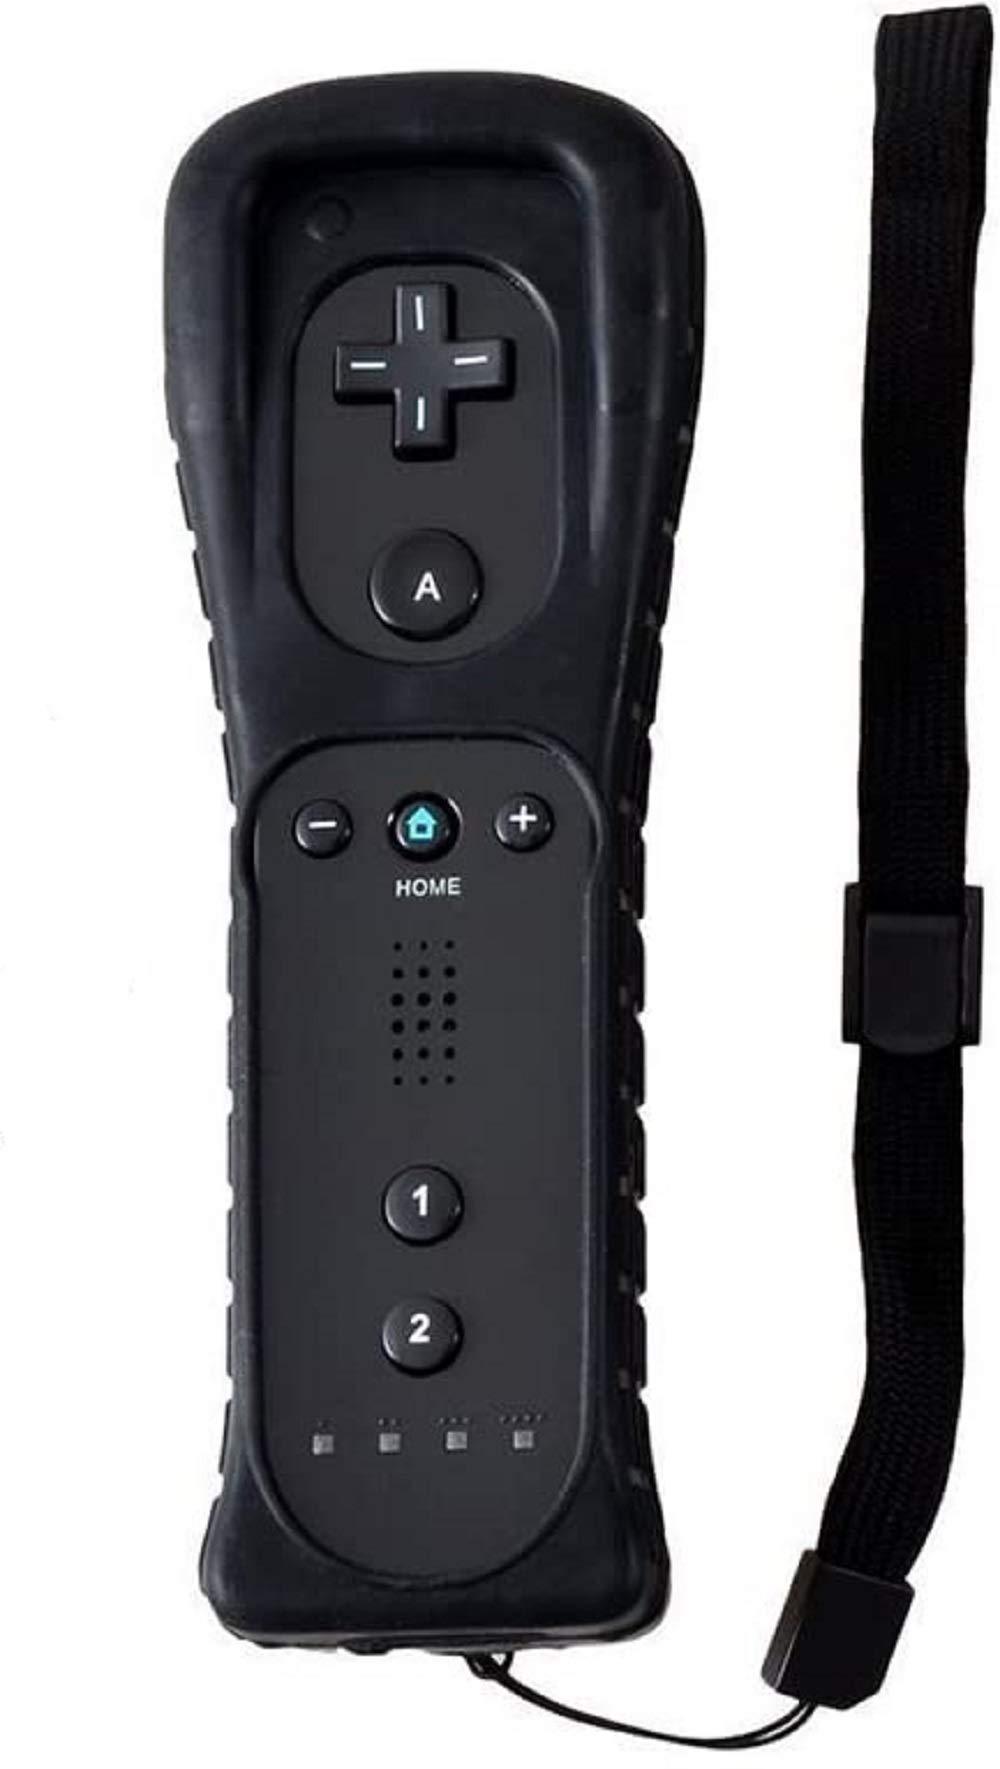  [AUSTRALIA] - Yudeg Wii Controller Wii Remote for Wii Wii U (Black) Black